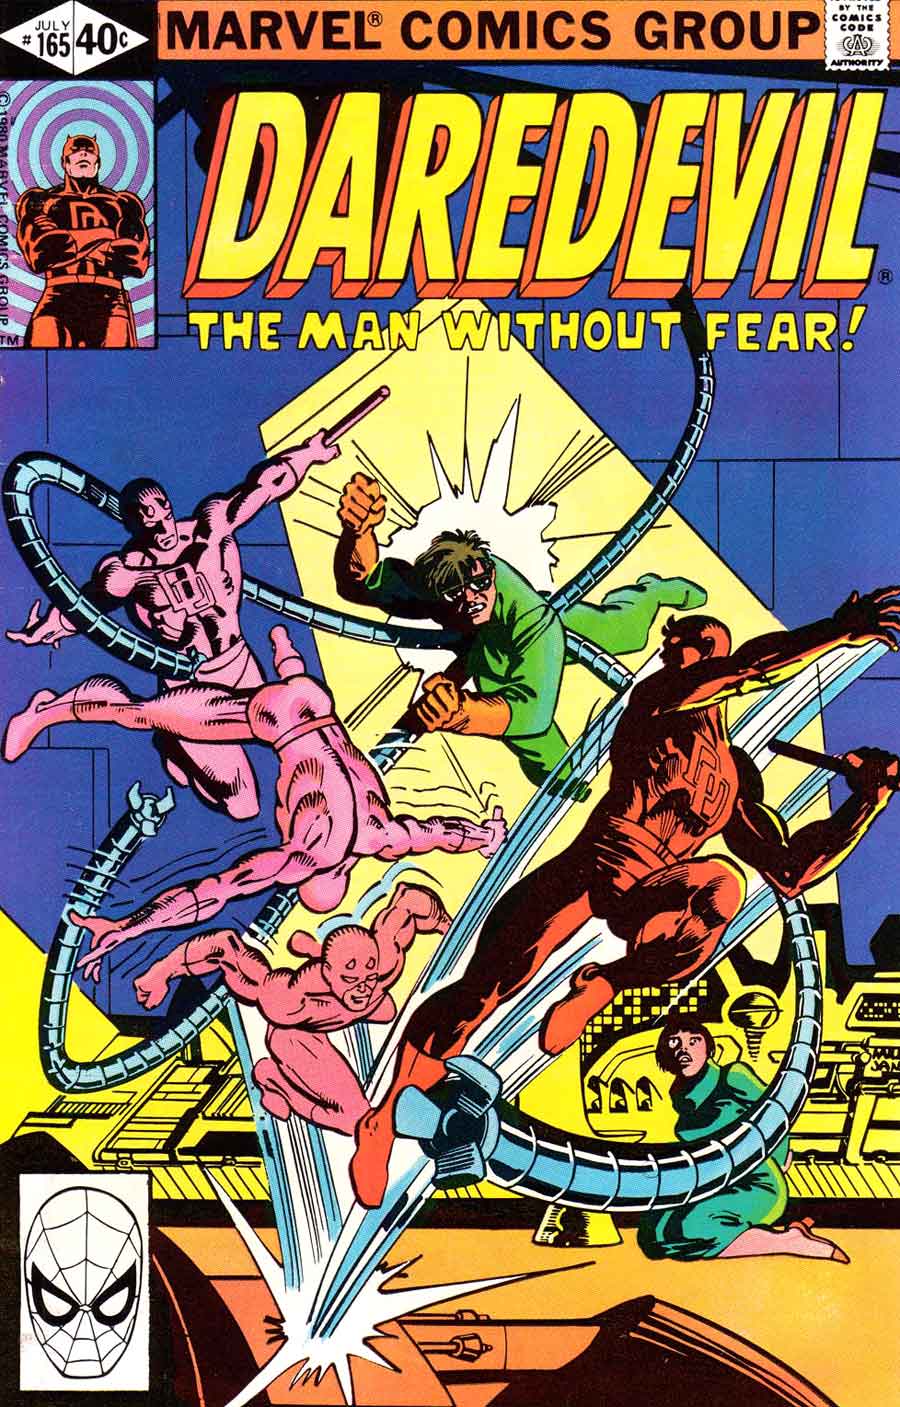 Daredevil v1 #165 marvel comic book cover art by Frank Miller